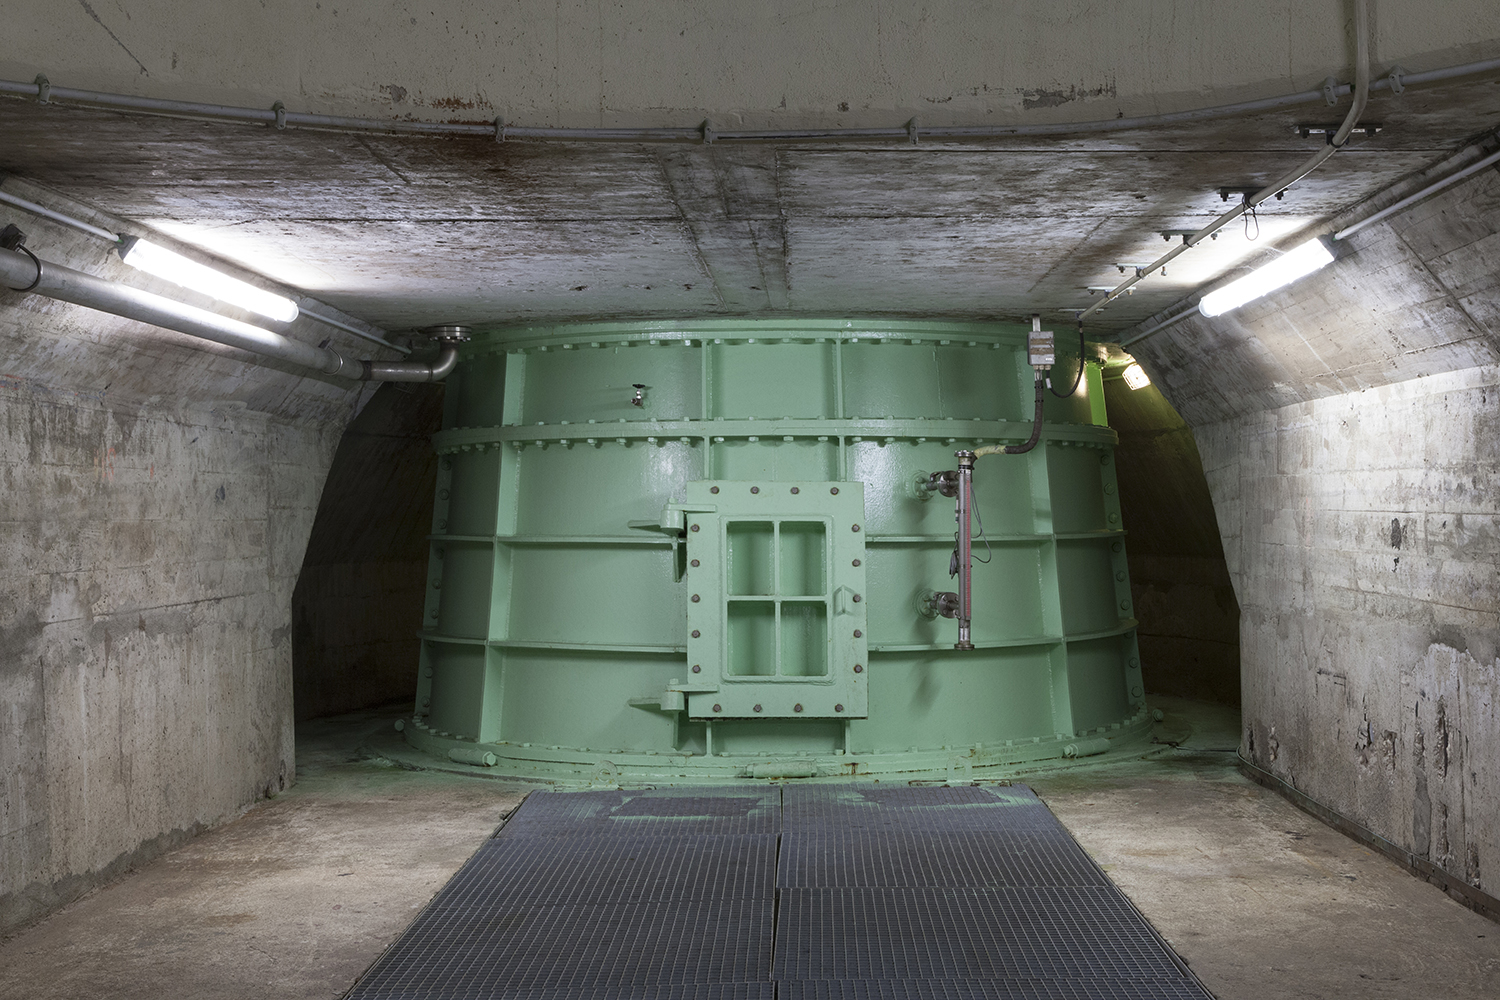 carina martins, vortex - green turbine in a tunnel dam